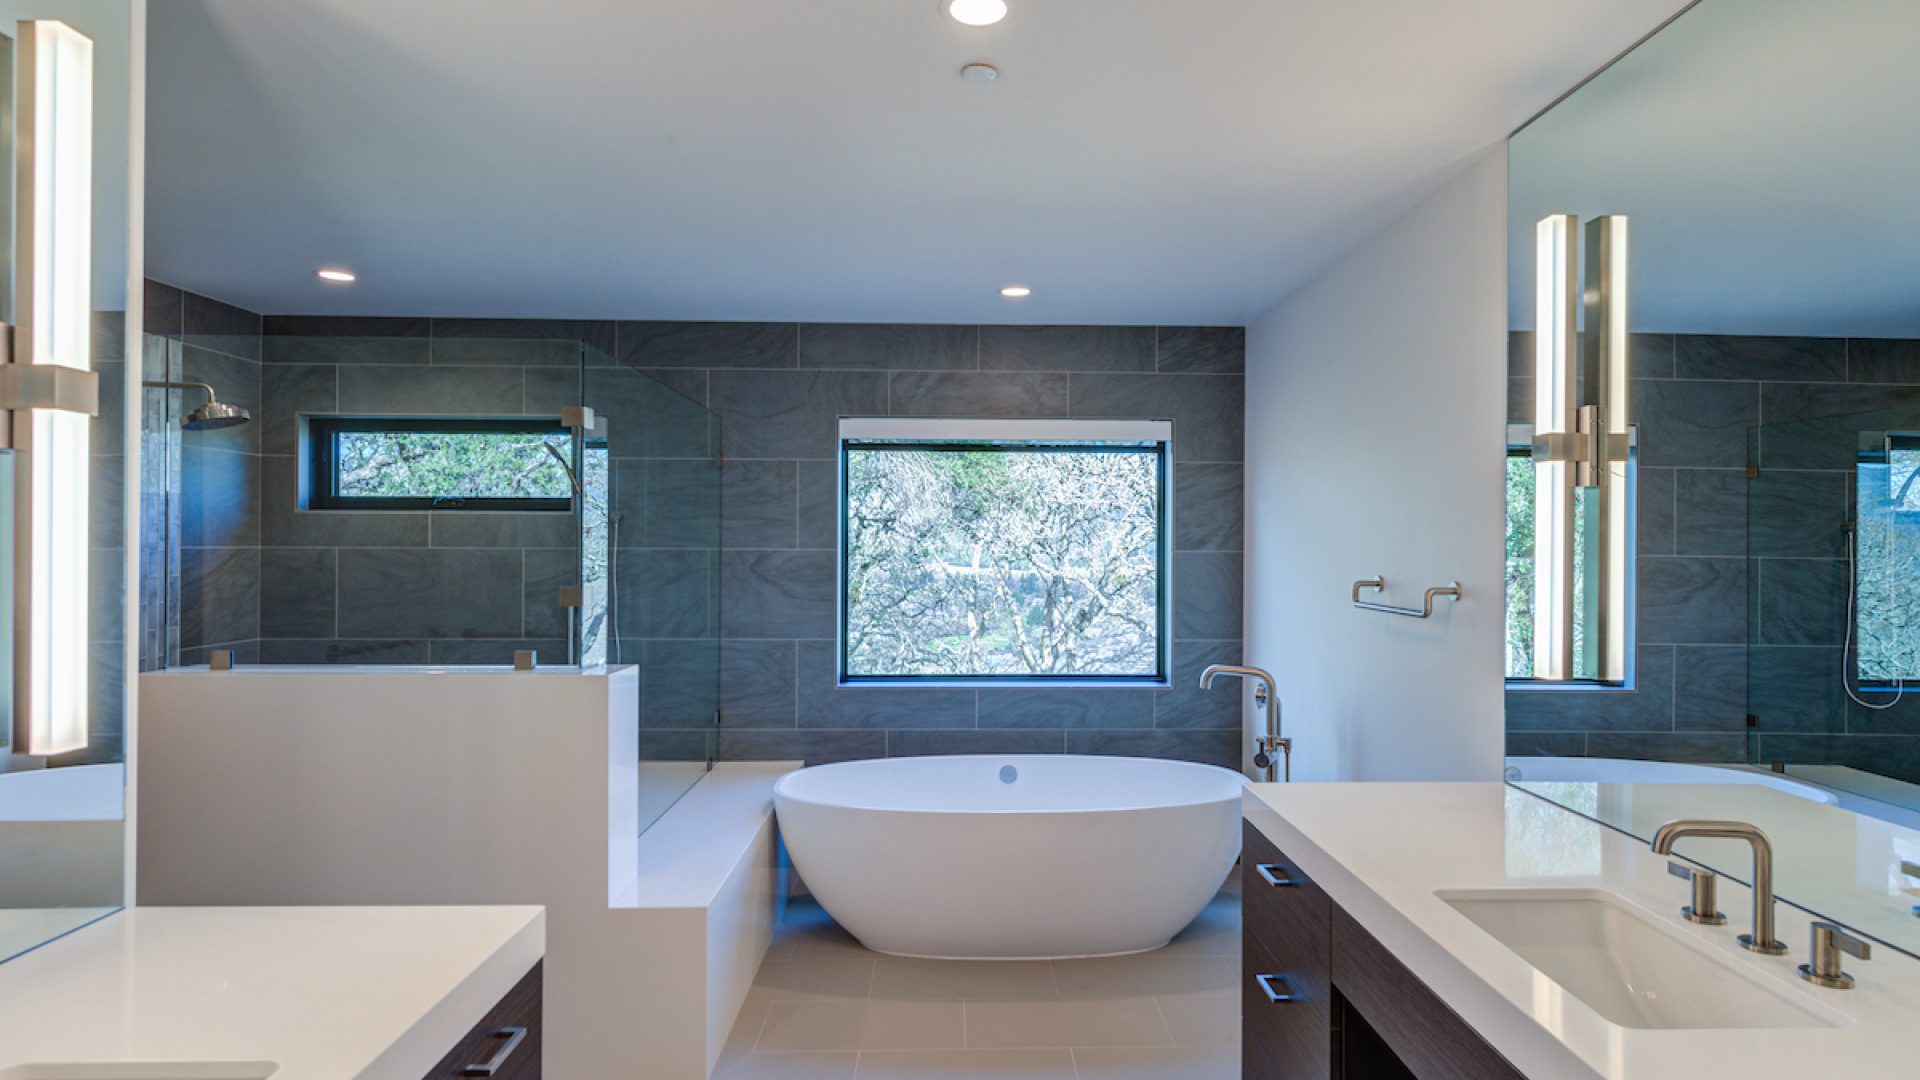 New custom home bathroom in Santa Rosa by Sonoma County's Premier Firm for Custom Homes + Remodeling LEFF Design Build.